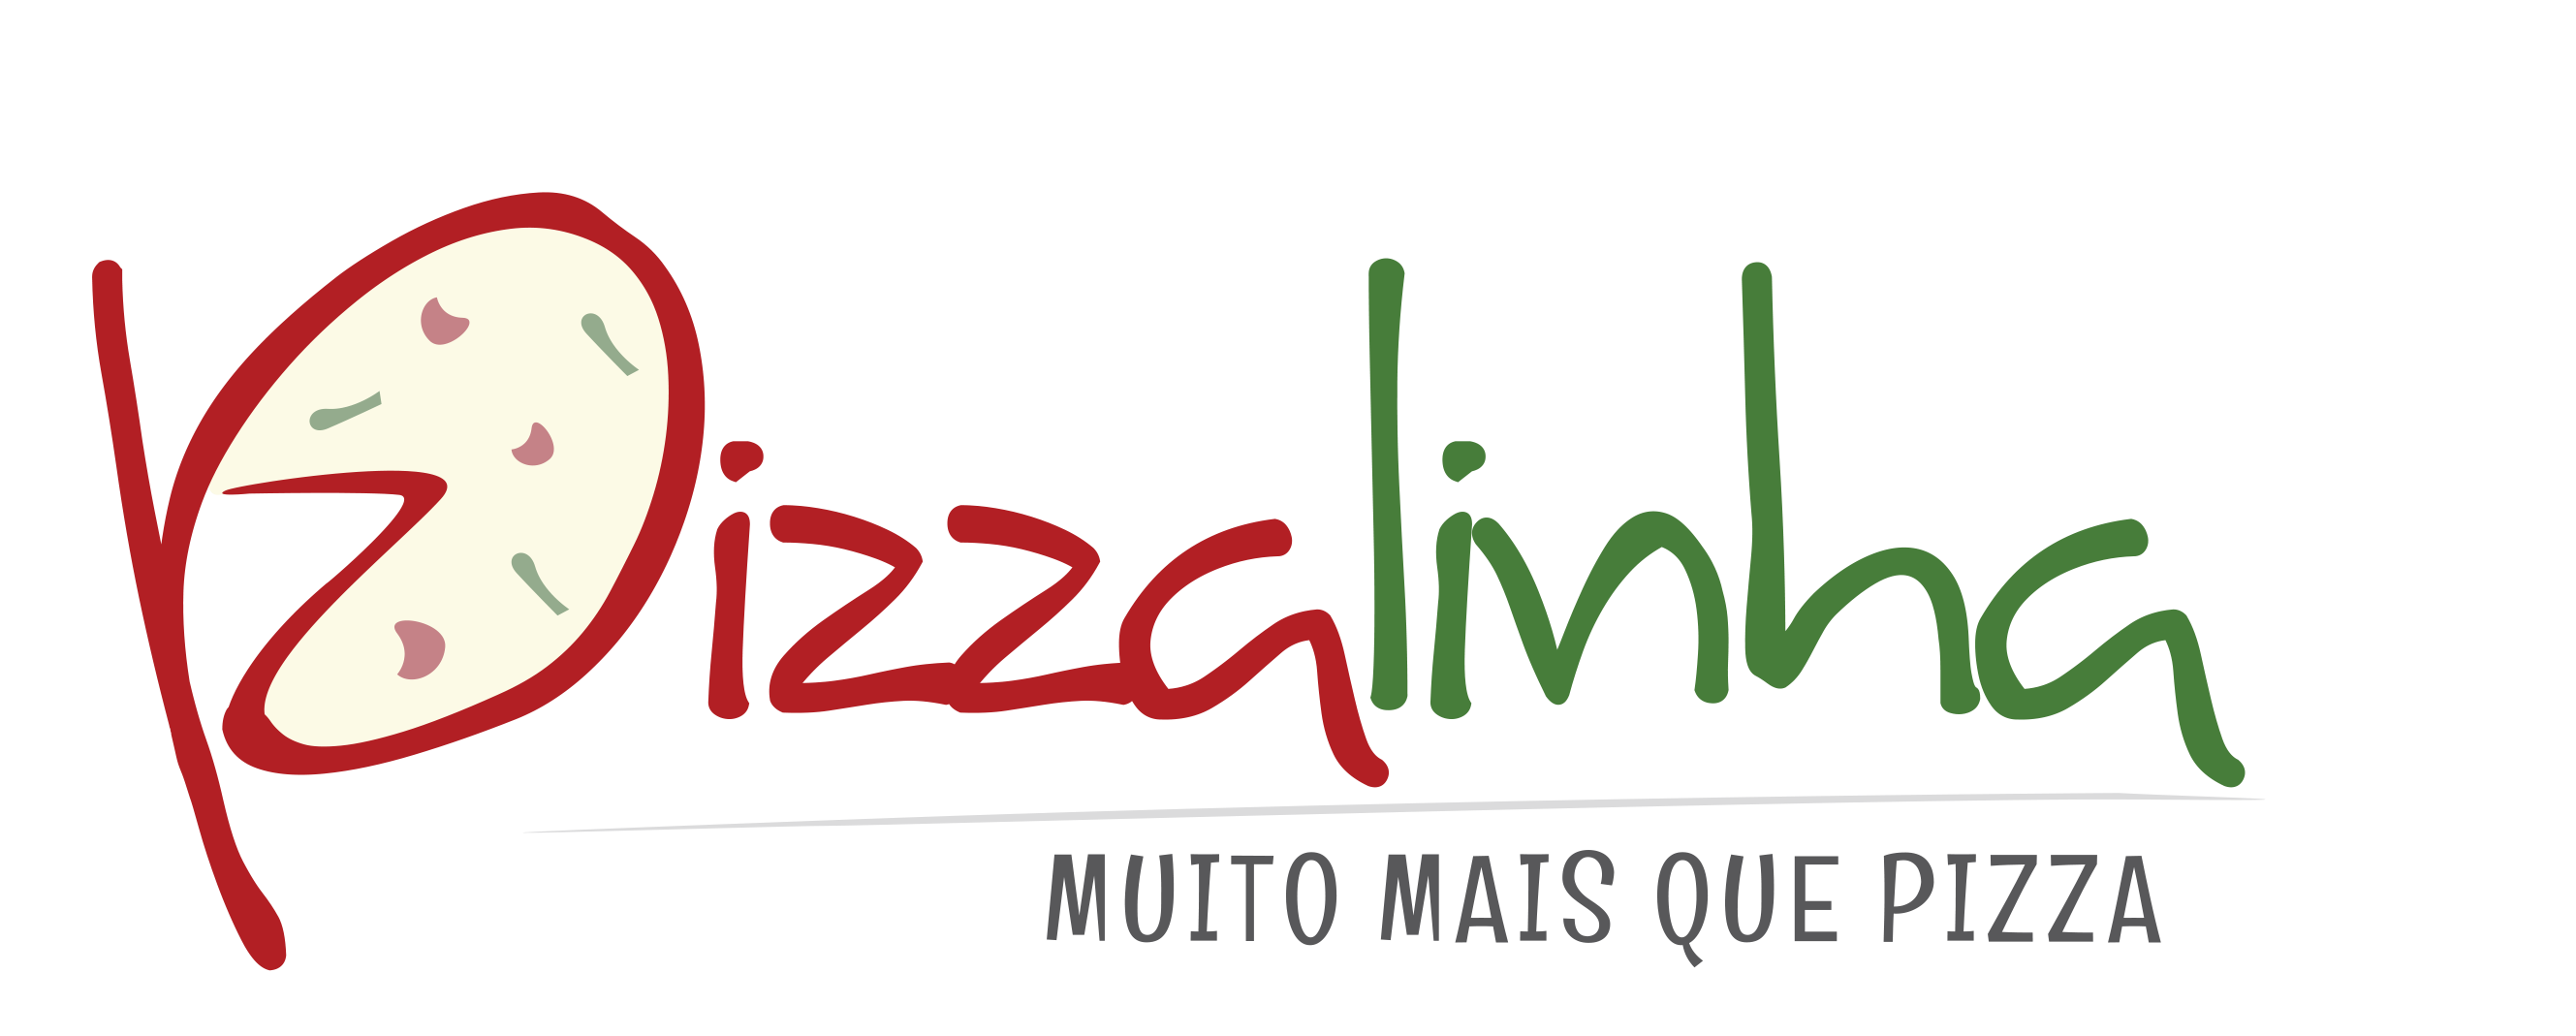 pizzalinha-marca-2018-bg-transp-